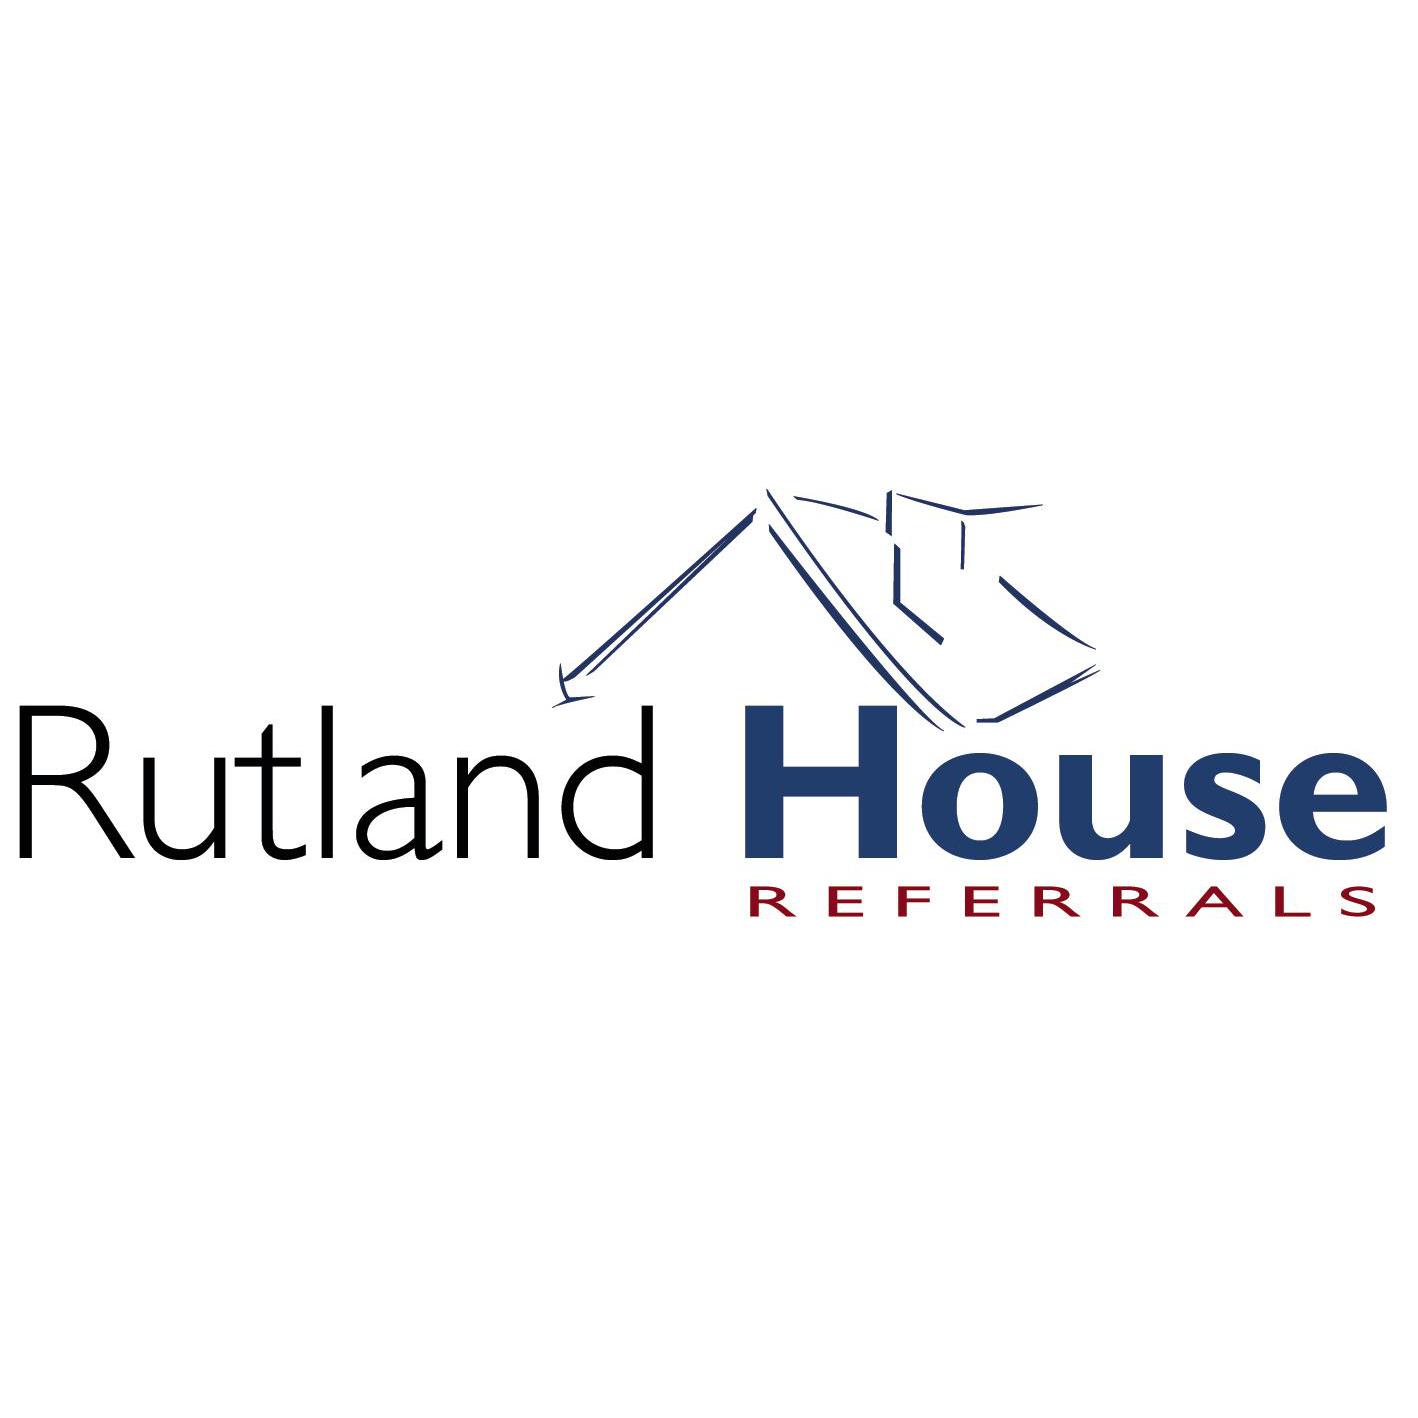 Rutland House Referrals - Saint Helens, Merseyside WA9 4HU - 01744 853510 | ShowMeLocal.com